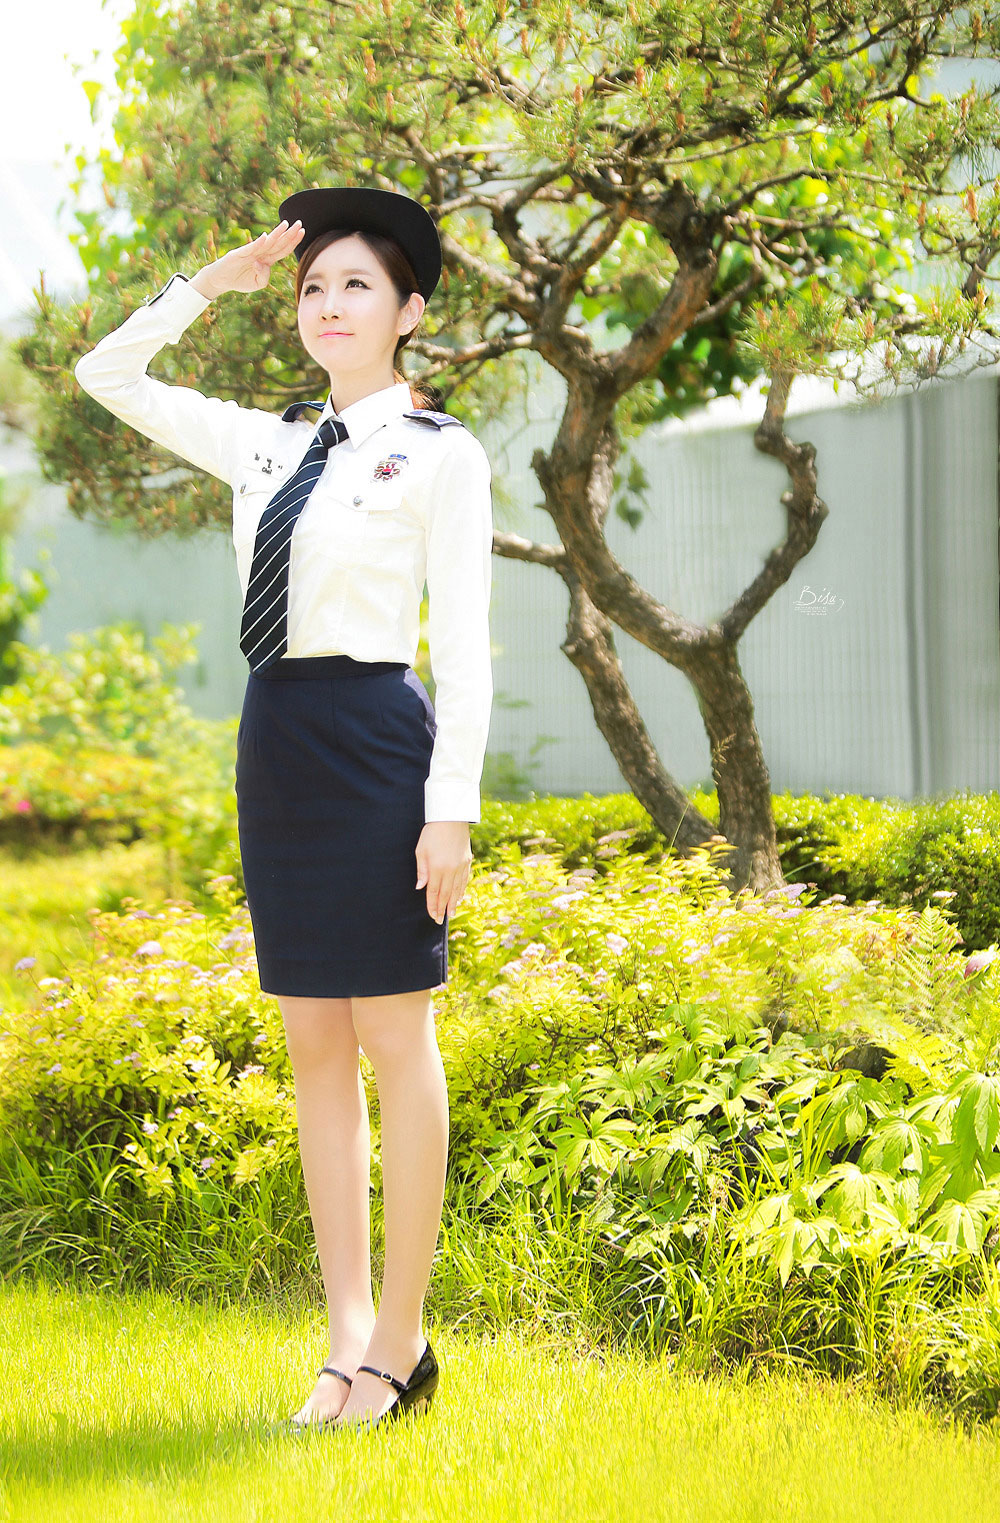 Choi Byul I Korean police uniform